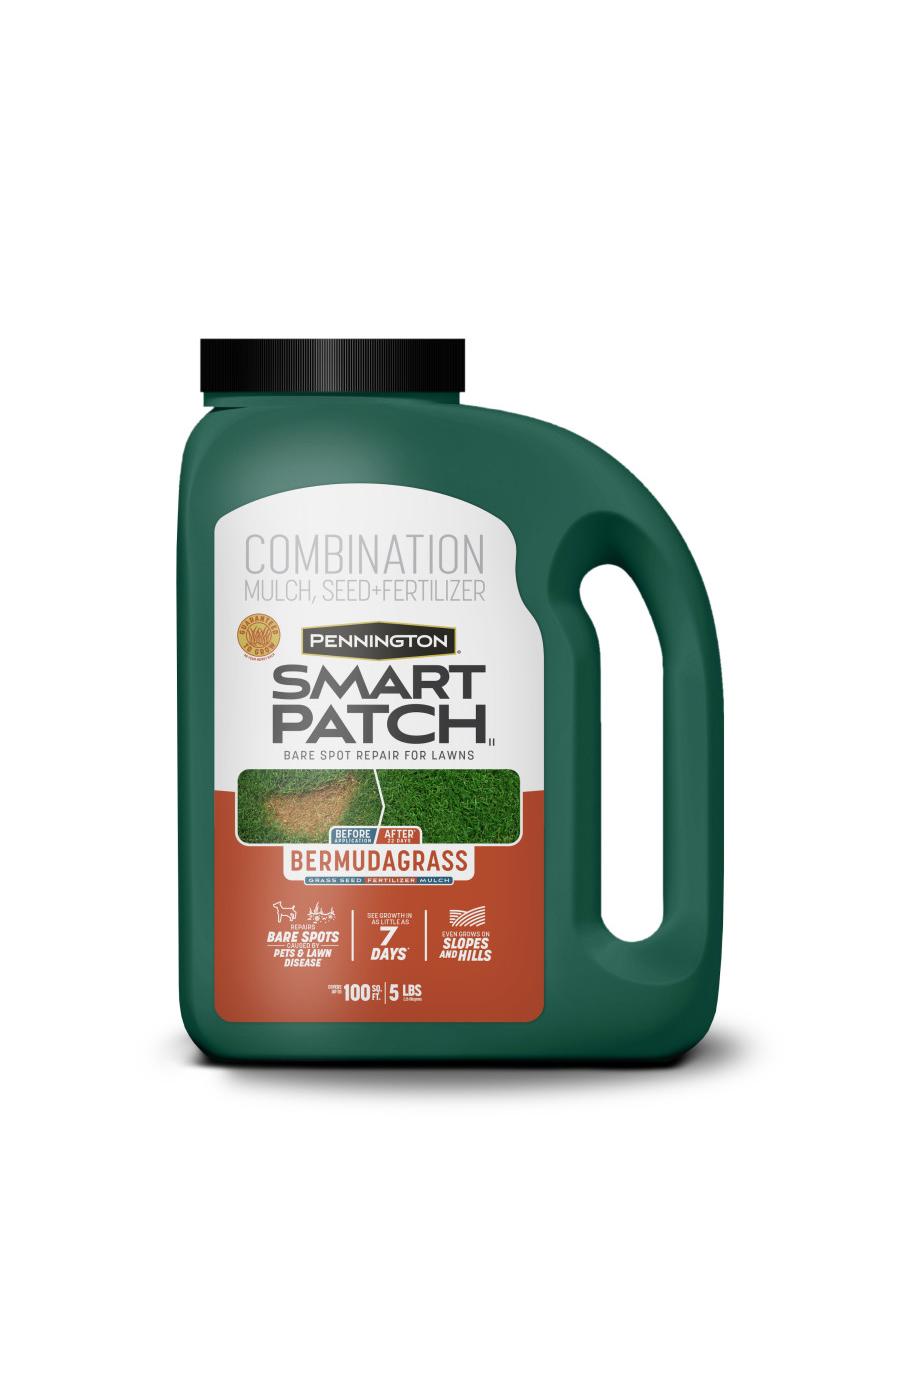 Pennington Smart Patch Bermudagrass Mix Seed Fertilizer; image 1 of 2